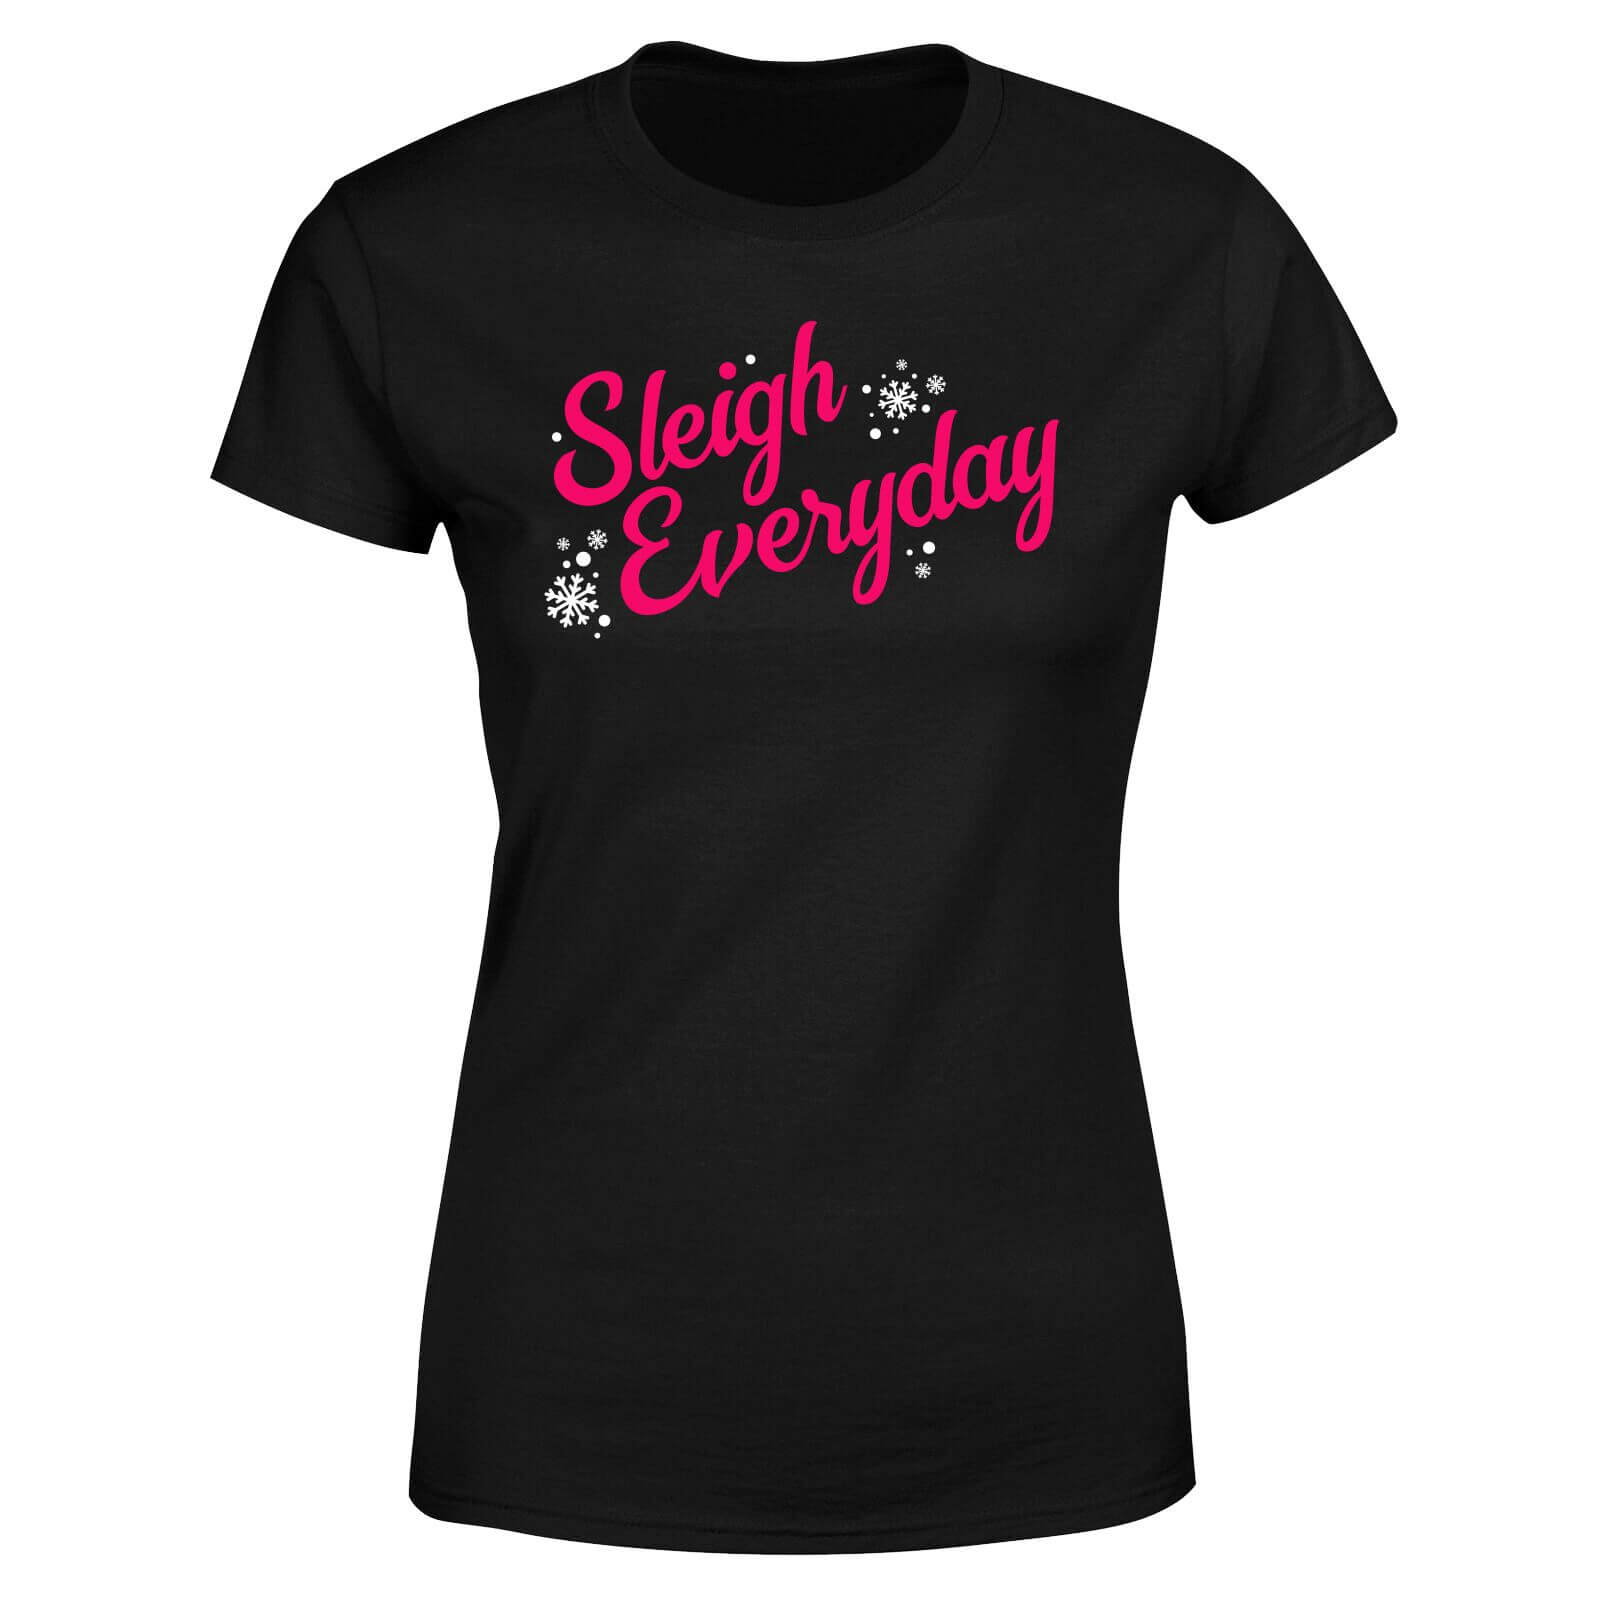 Sleigh Everyday Women's T-Shirt - Black - XS - Black